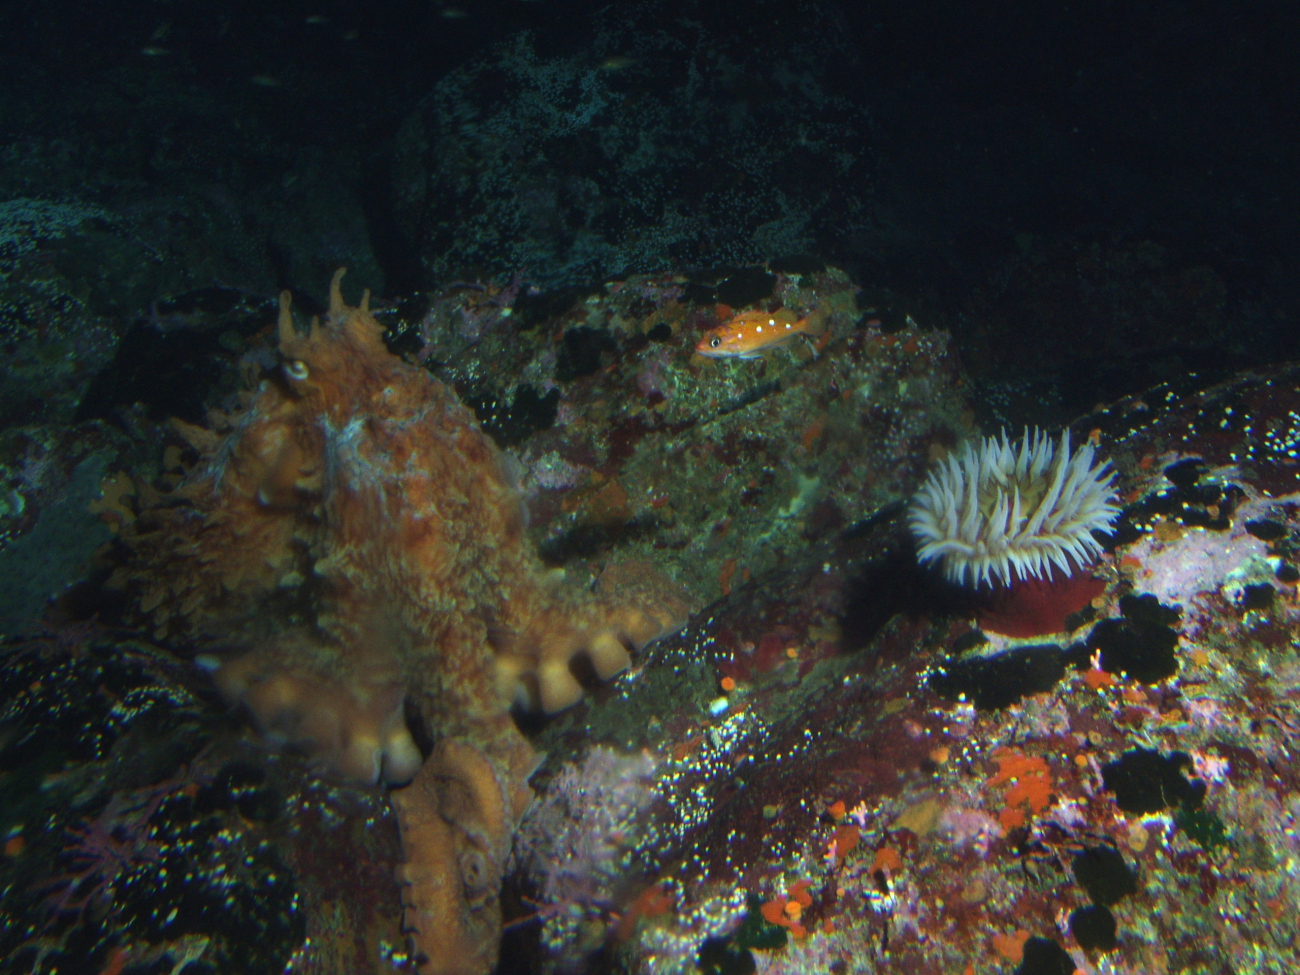 Giant Pacific Octopus (Octopus dofleini), rosy rockfish (Sebastes rosaceus),and anemone in boulder habitatat 90 meters depth